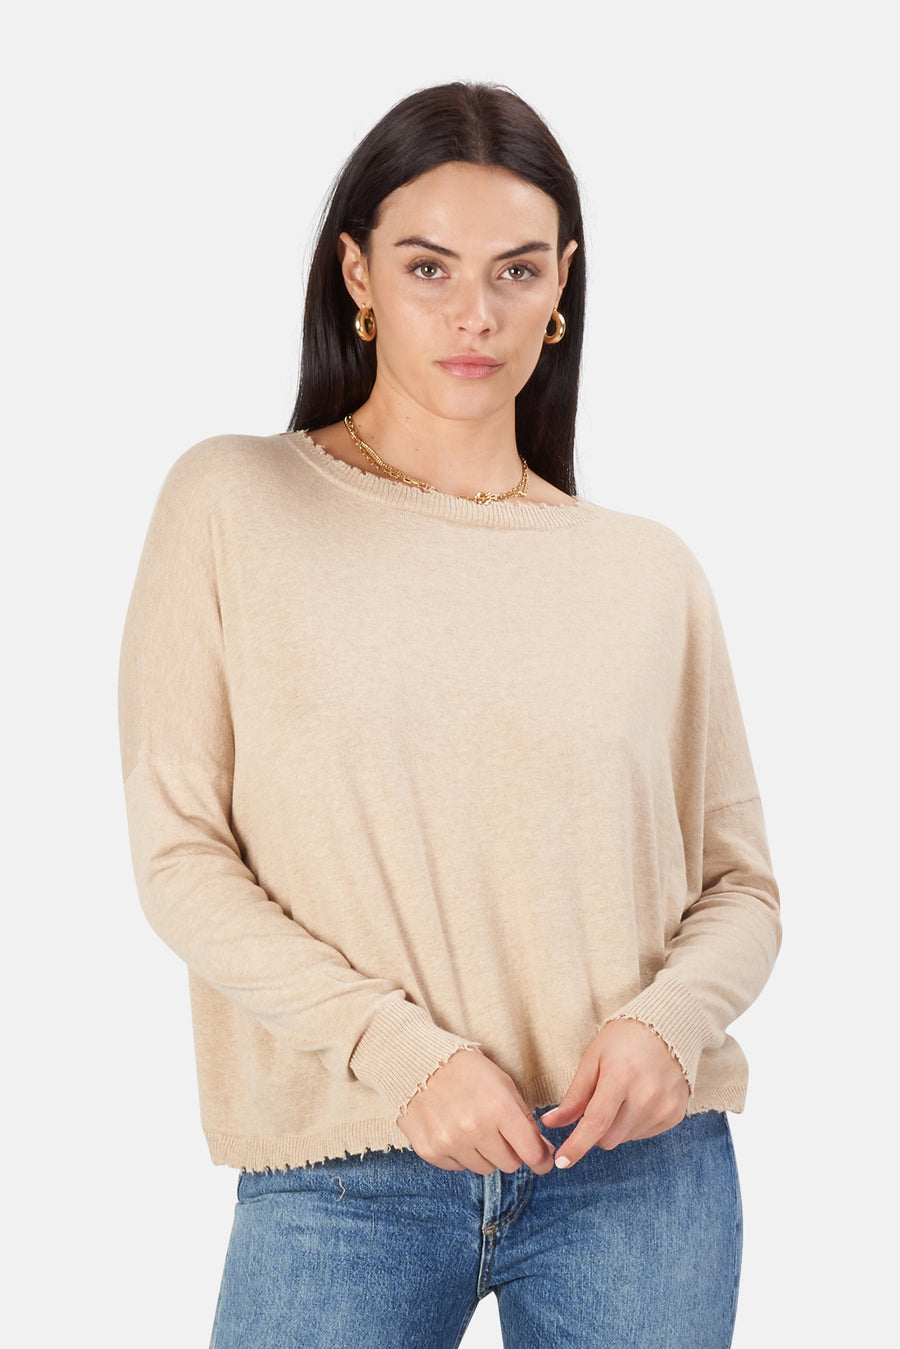 Minnie Rose Linen Cotton/Cashmere Crop Sweater - blueandcream